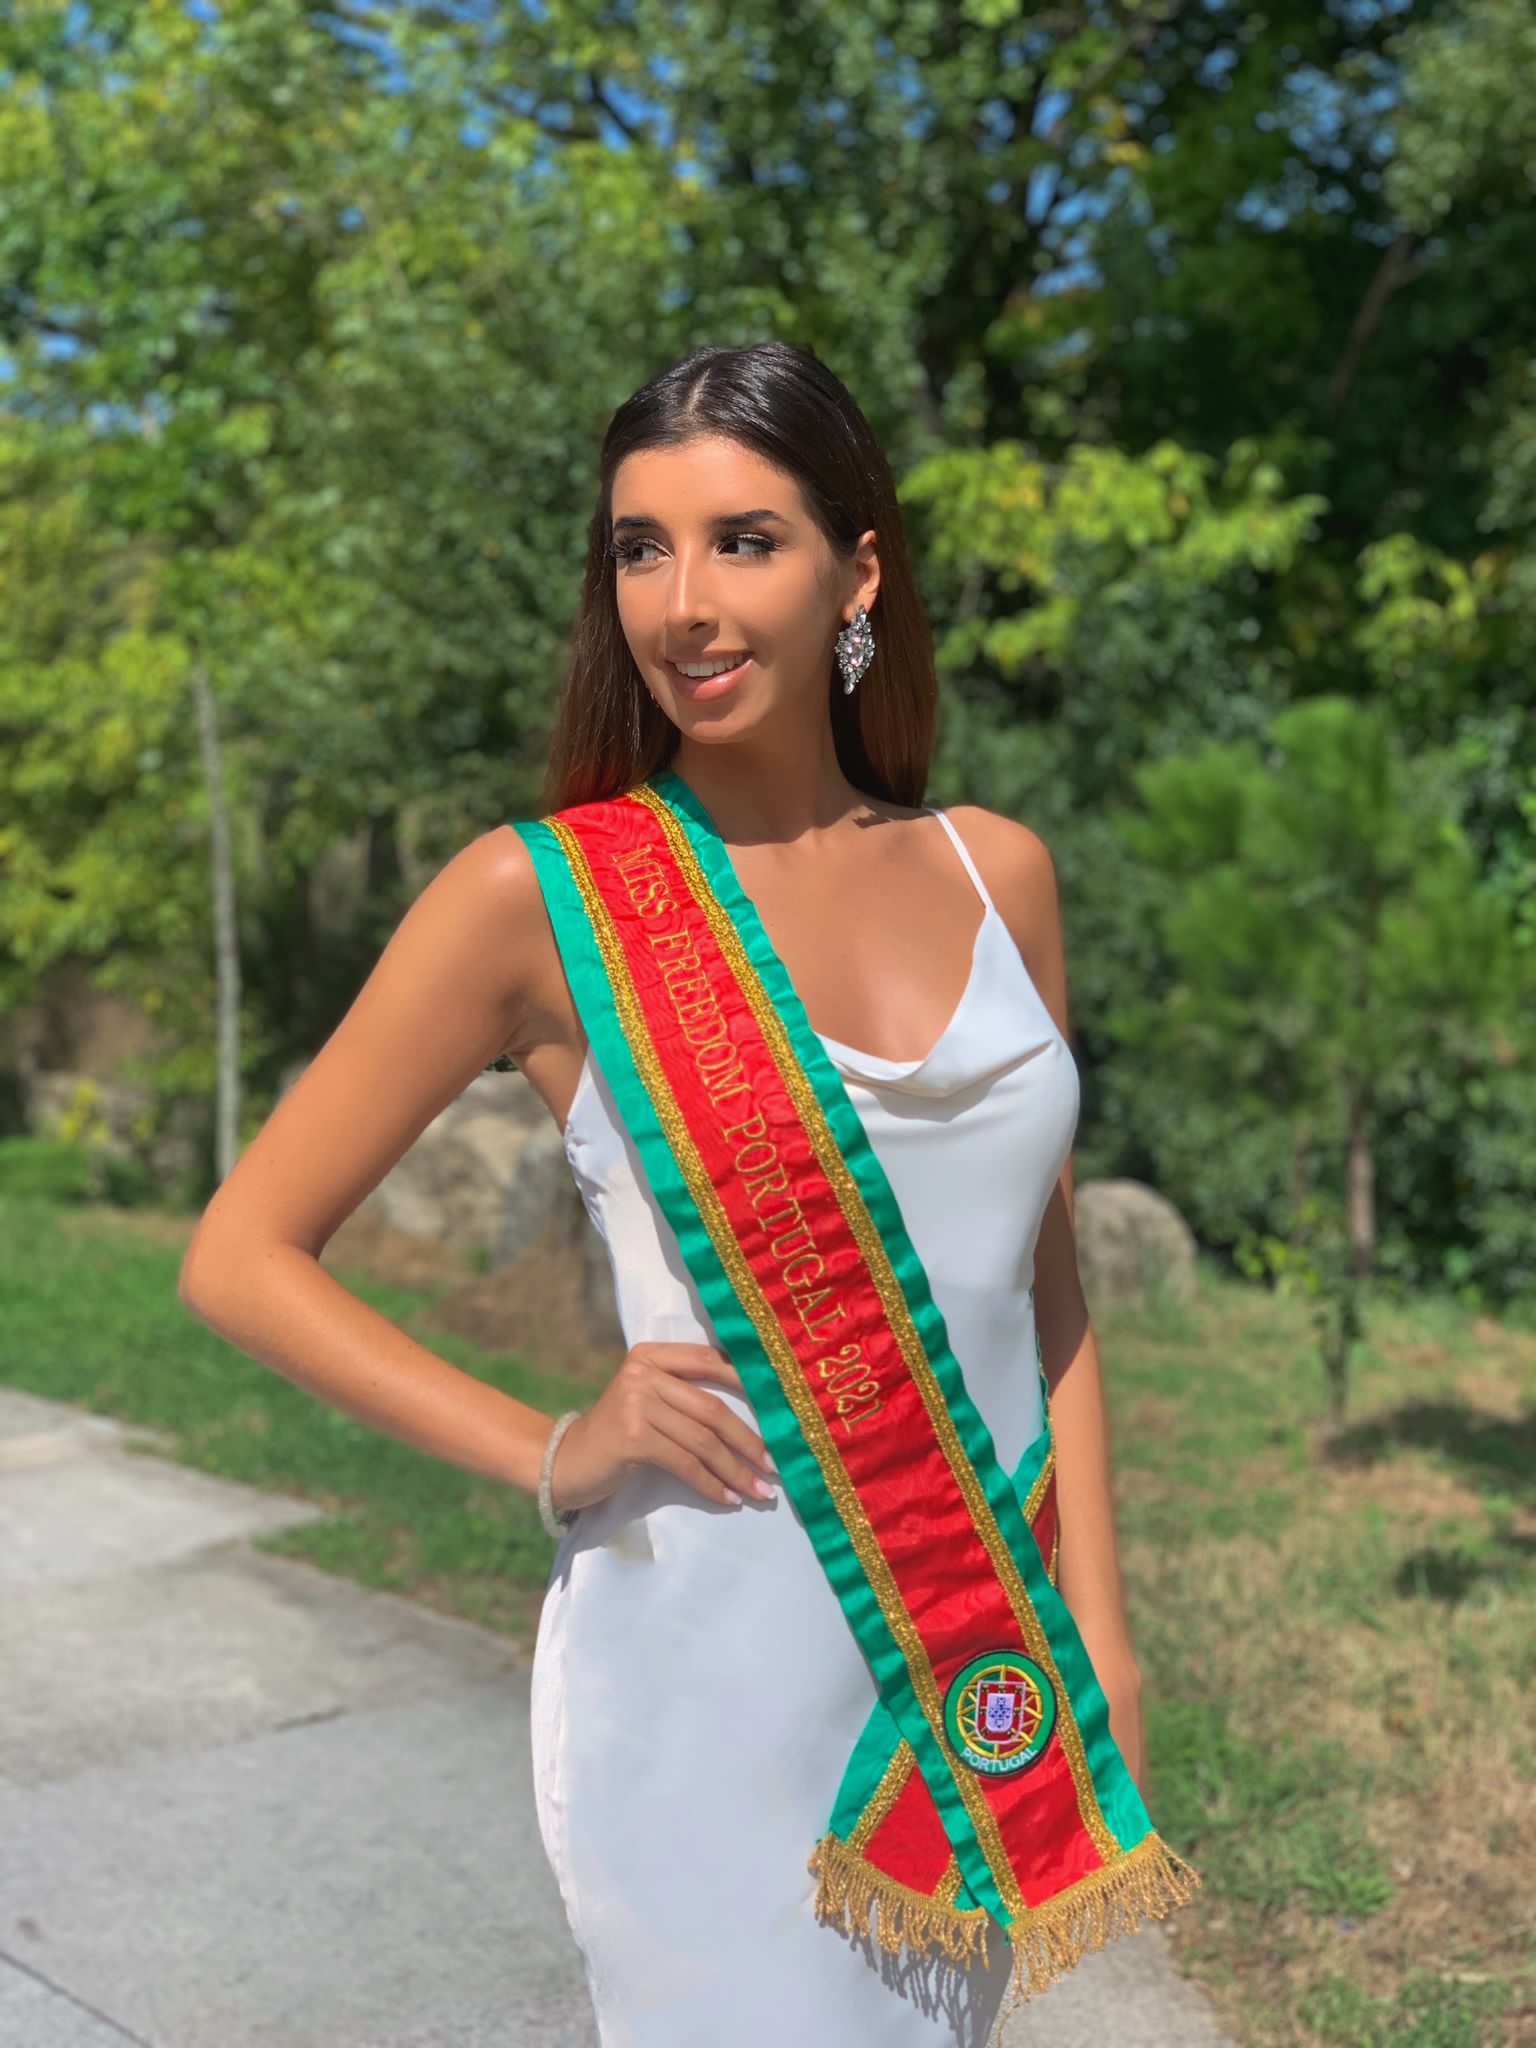 Olivia Azevedo é Miss Freedom Portugal 2021